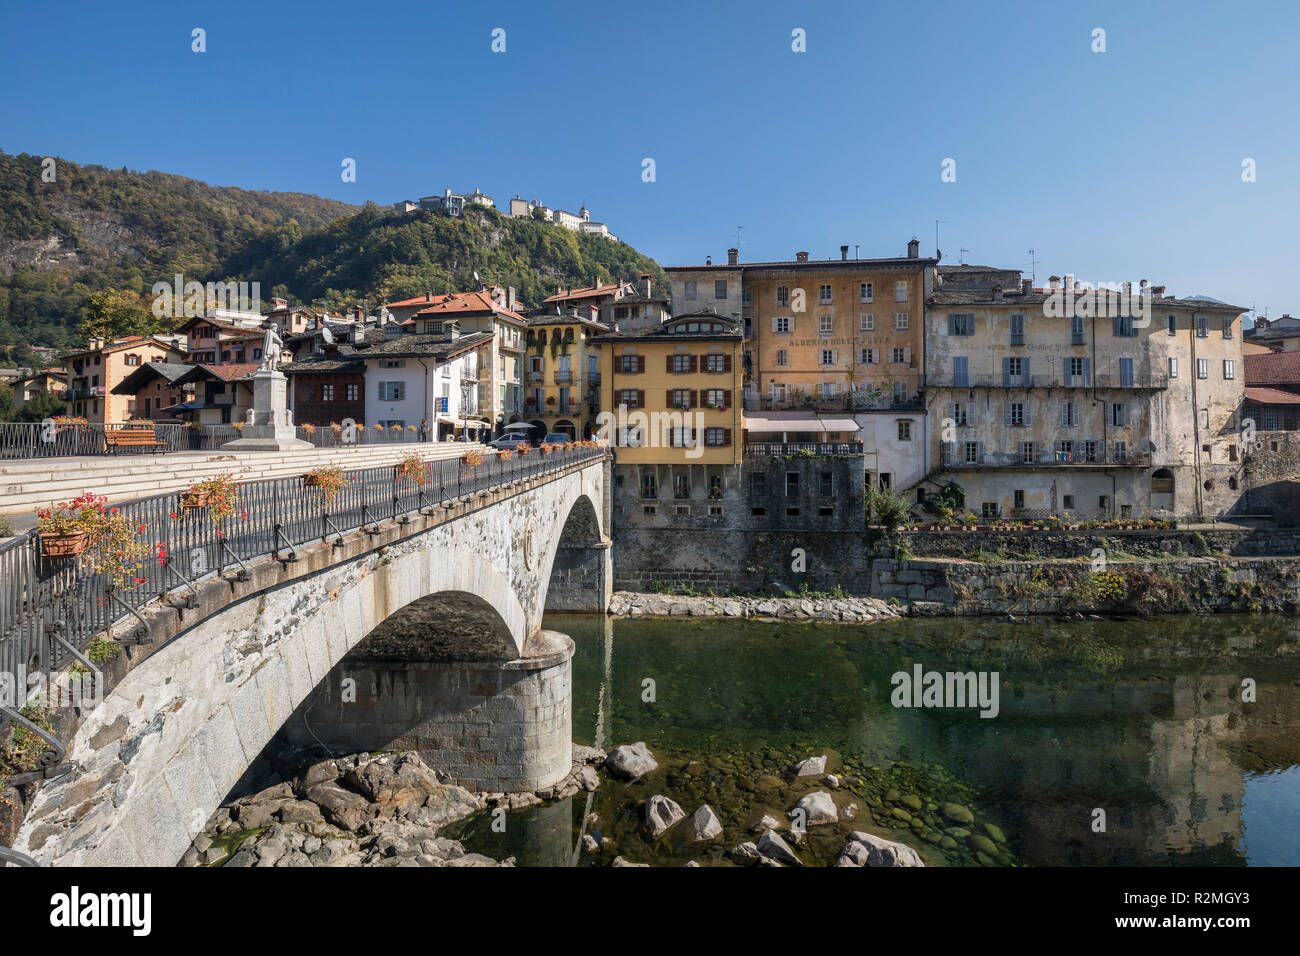 Brücke über die Sesia, Altstadt von Varallo, hinter dem heiligen Berg Sacro Monte di Varallo (UNESCO Welterbe seit 2003), Varallo, Provinz Vercelli, Piemont, Italien Stockfoto